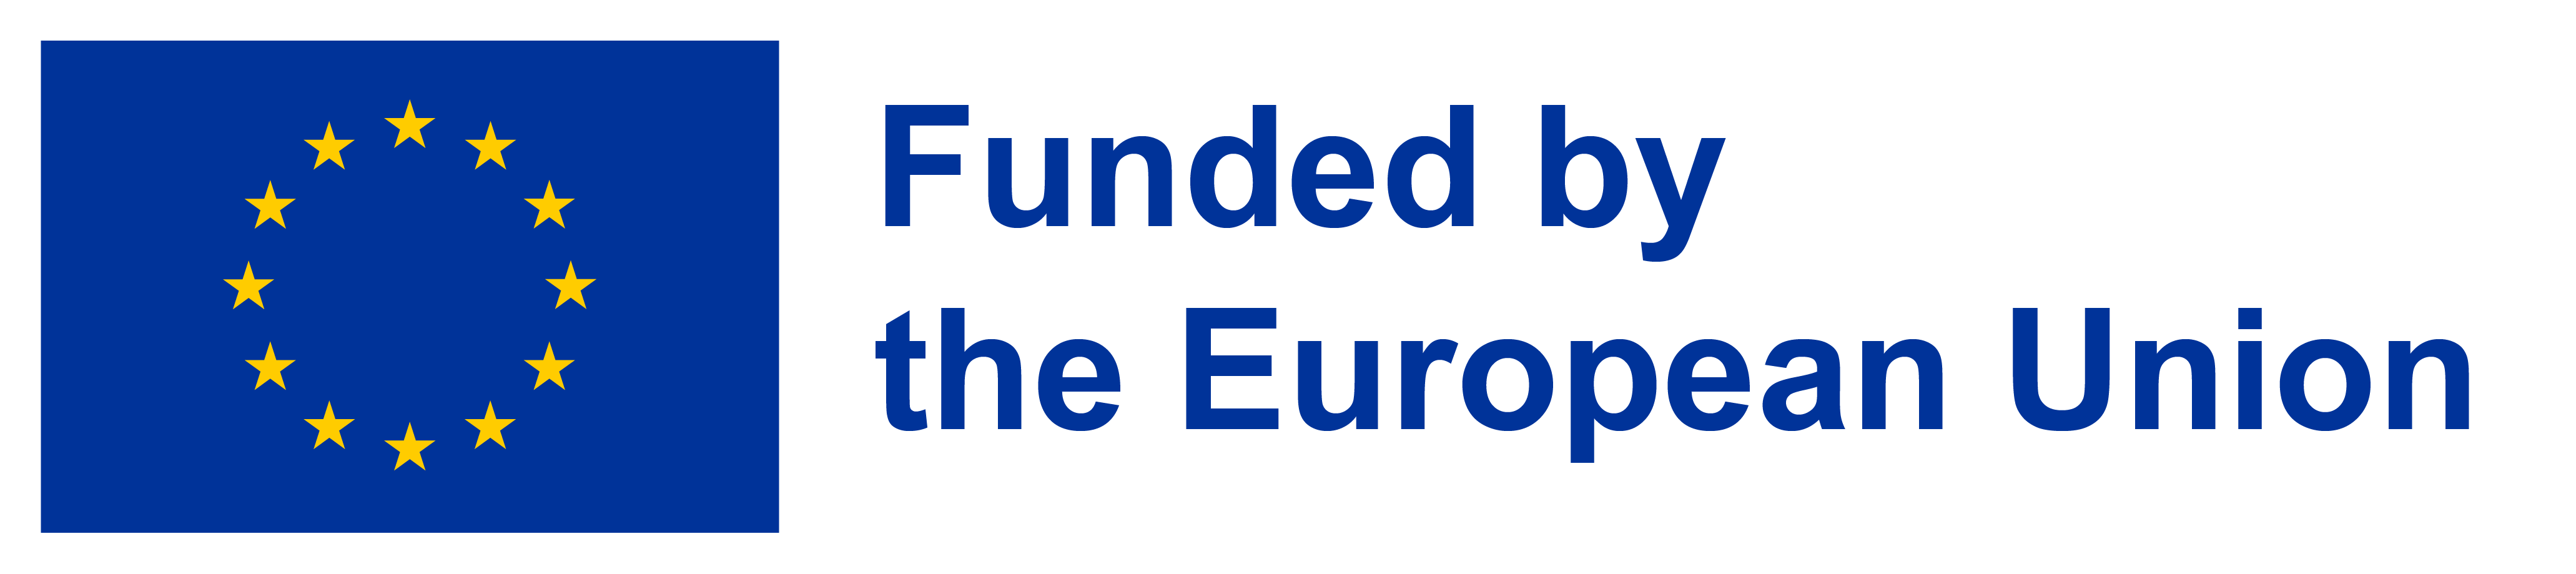 EU Emblem with the banner 